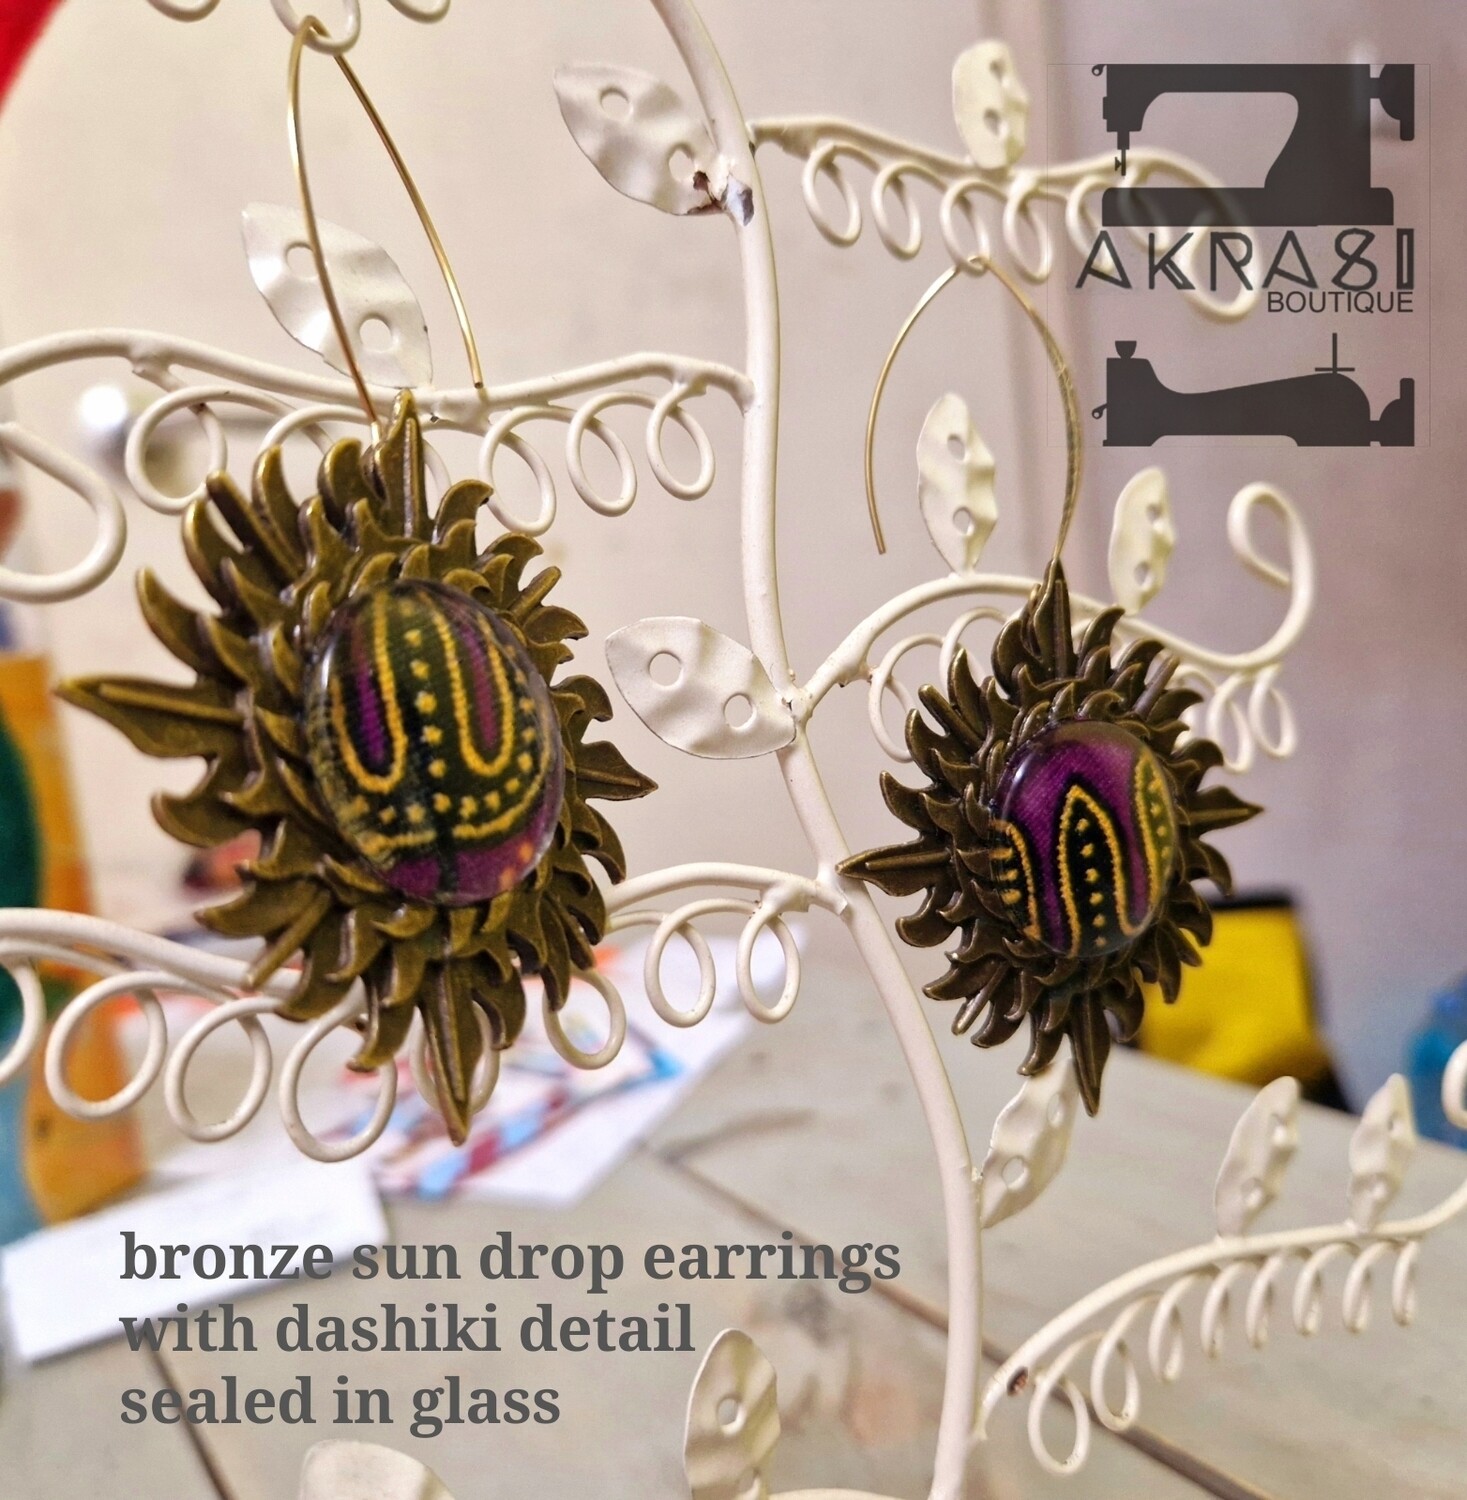 Custom handmade bronze drop earrings with dashiki detail for Esther